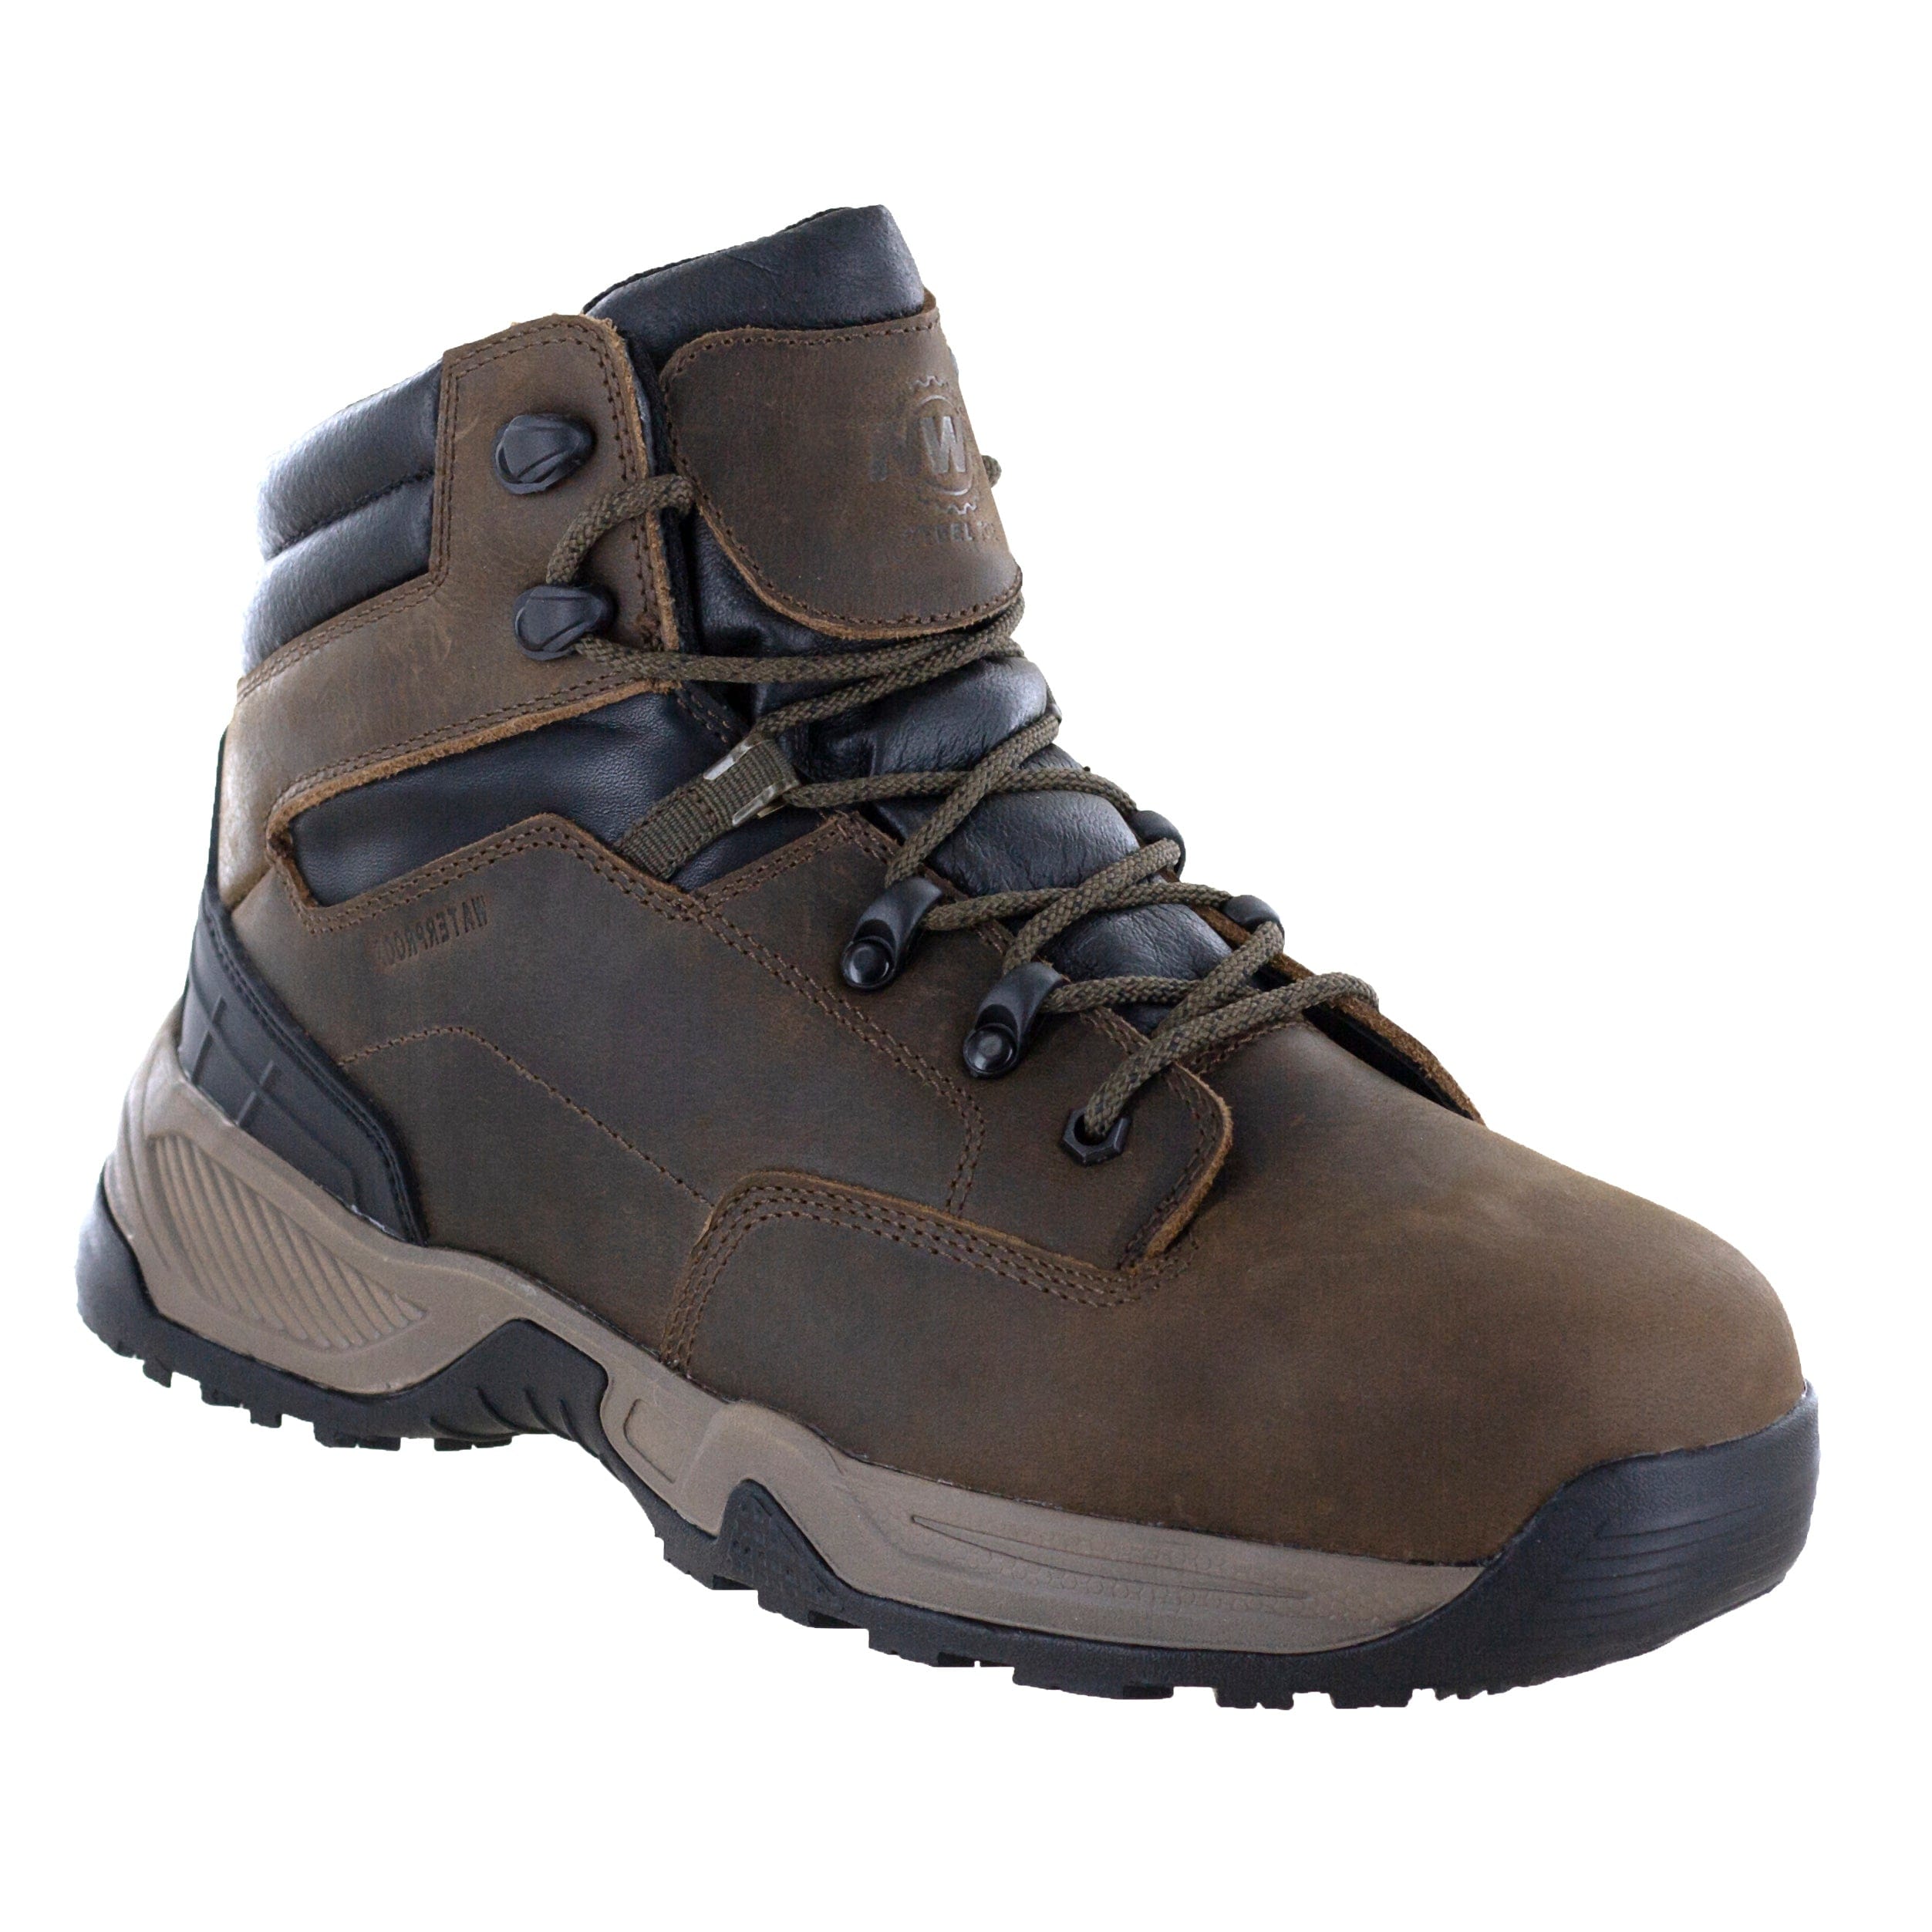 Work boot composite toe slip resistant oil work shoe comfortable